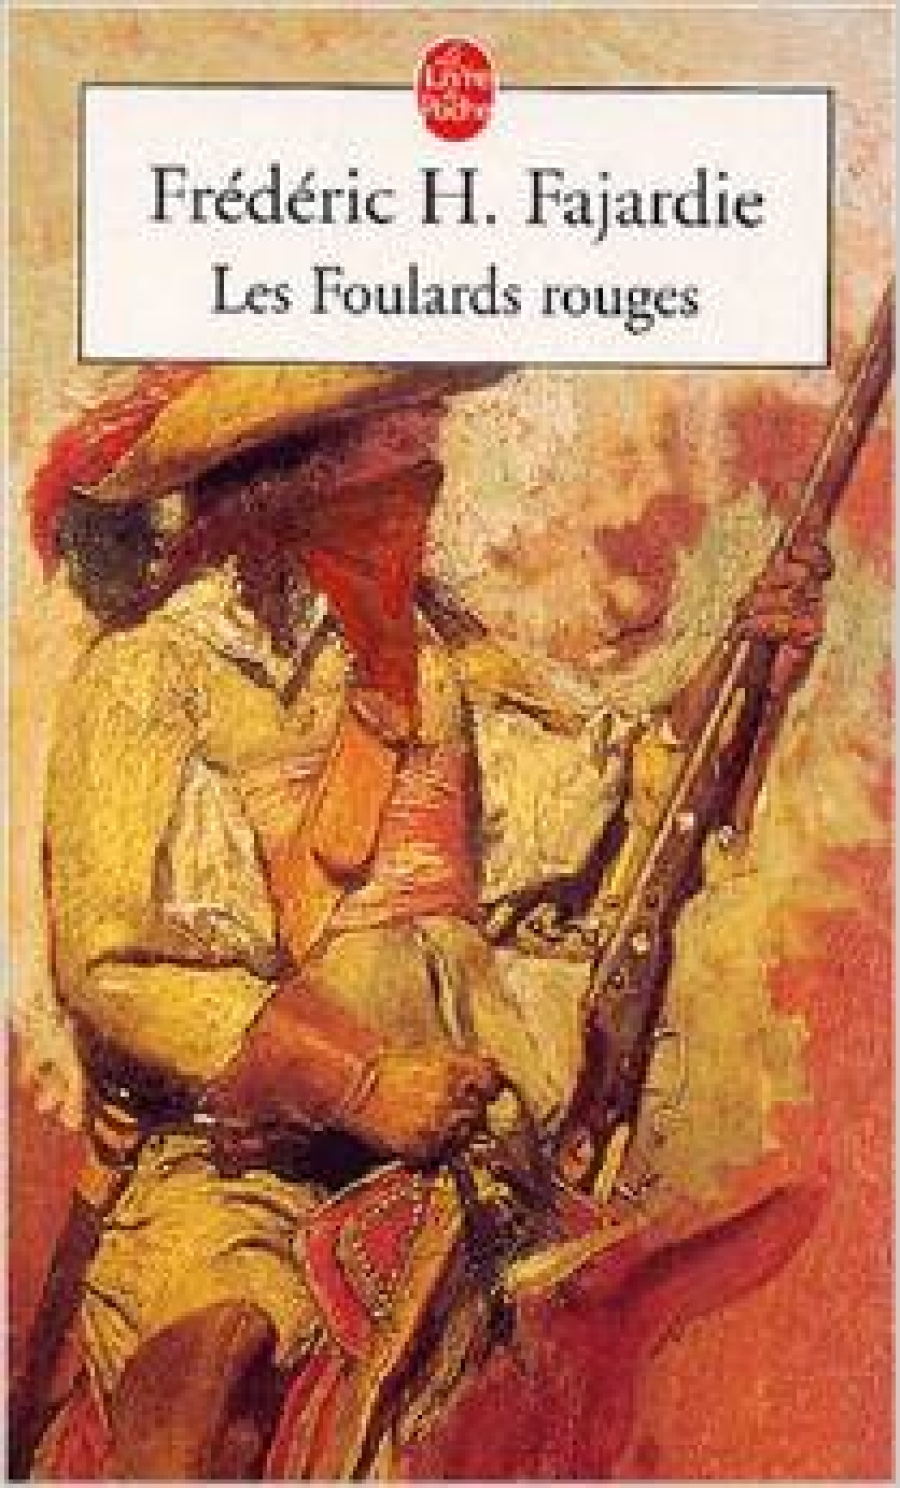 Frederic H. Fajardie Les Foulards rouges 